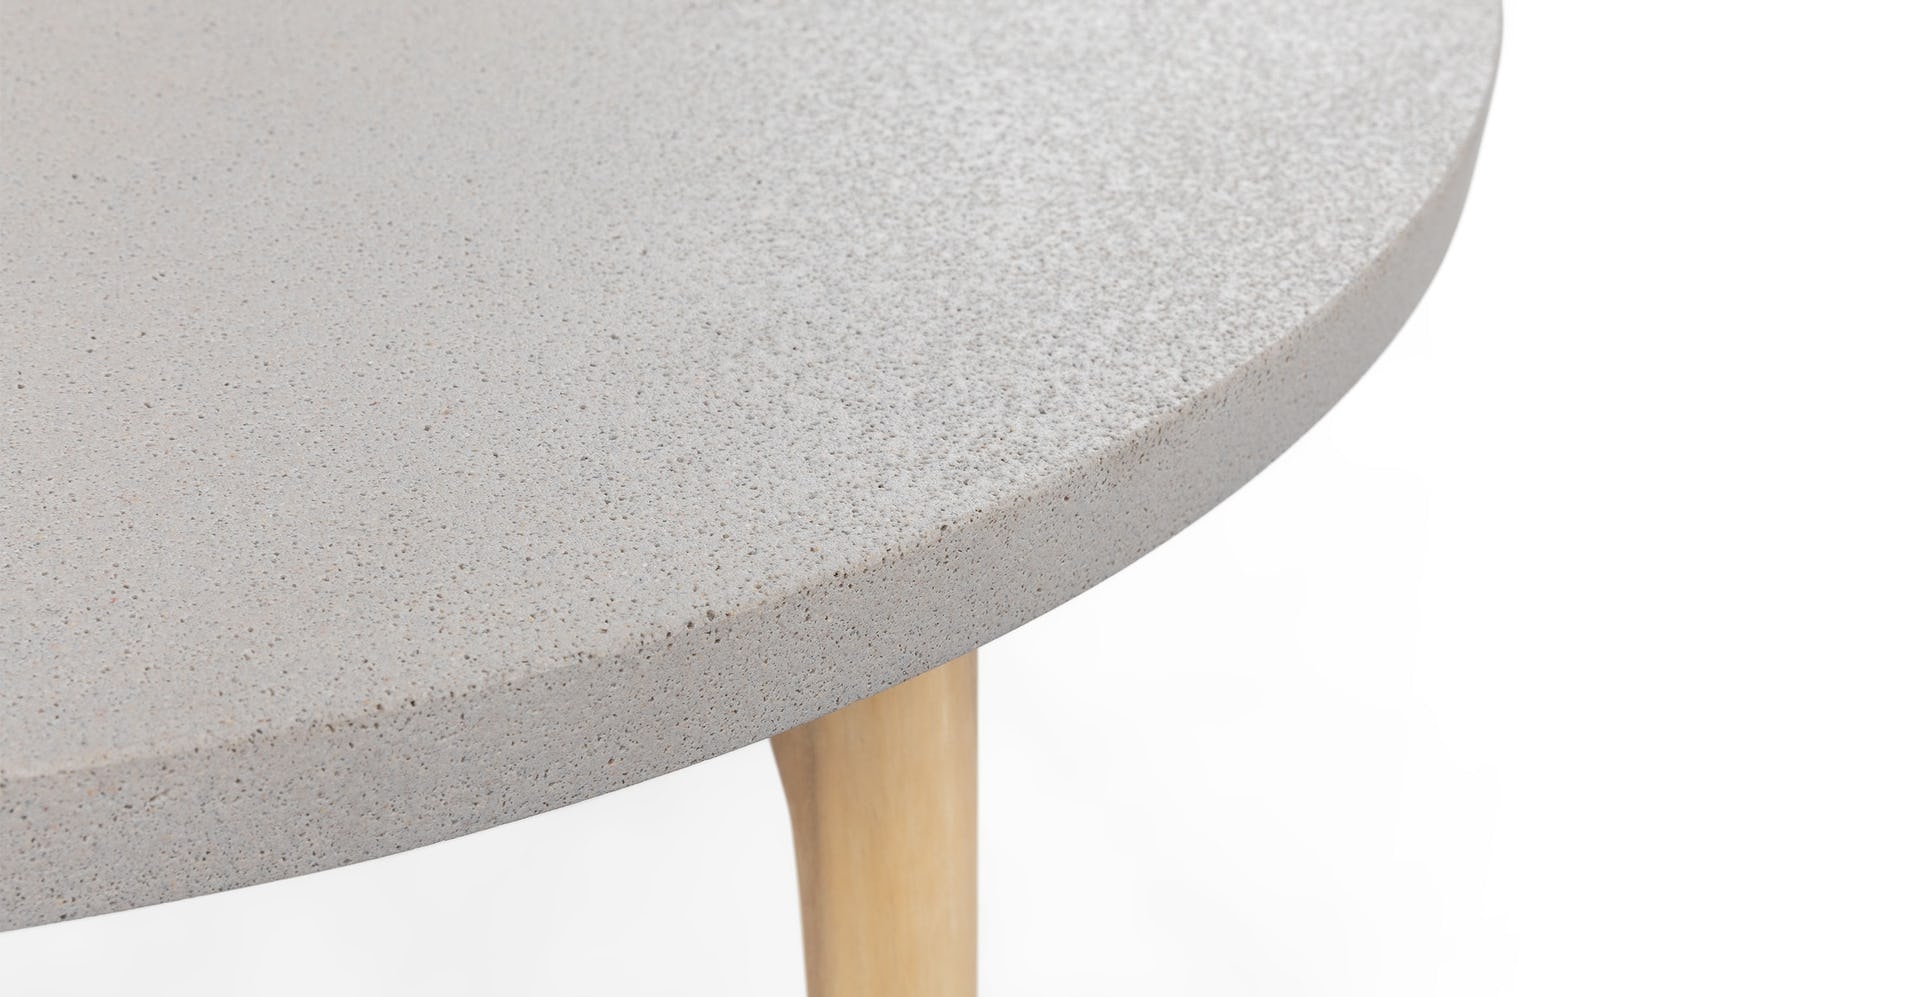 Atra Concrete Round Coffee Table - Image 1